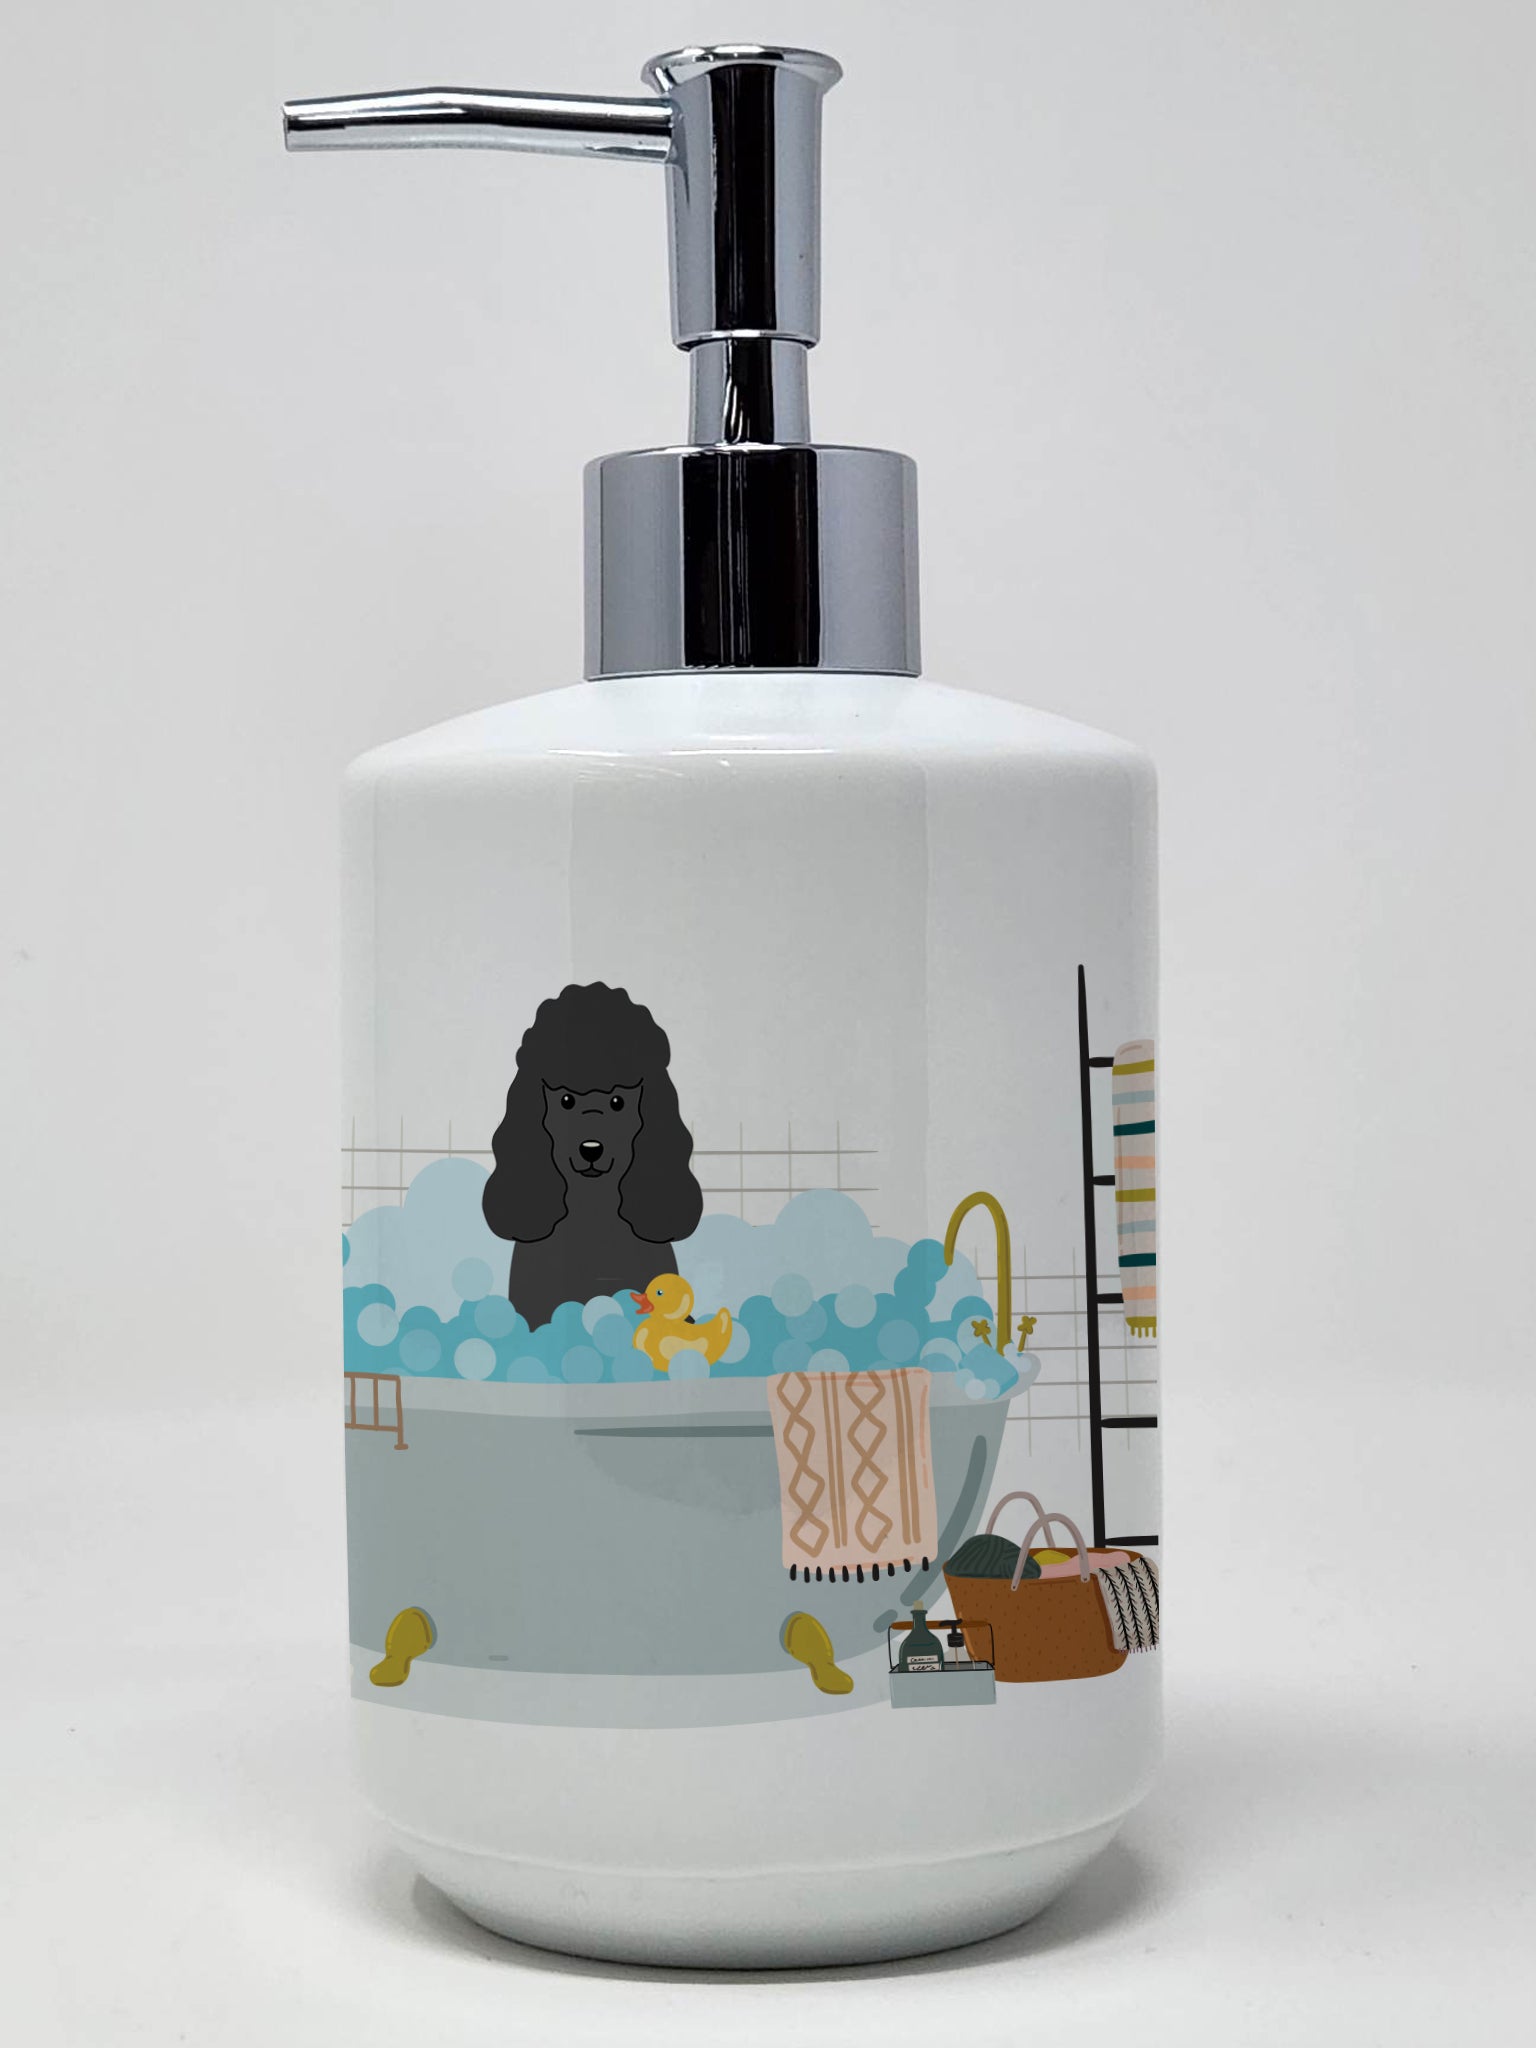 Buy this Black Poodle in Bathtub Ceramic Soap Dispenser